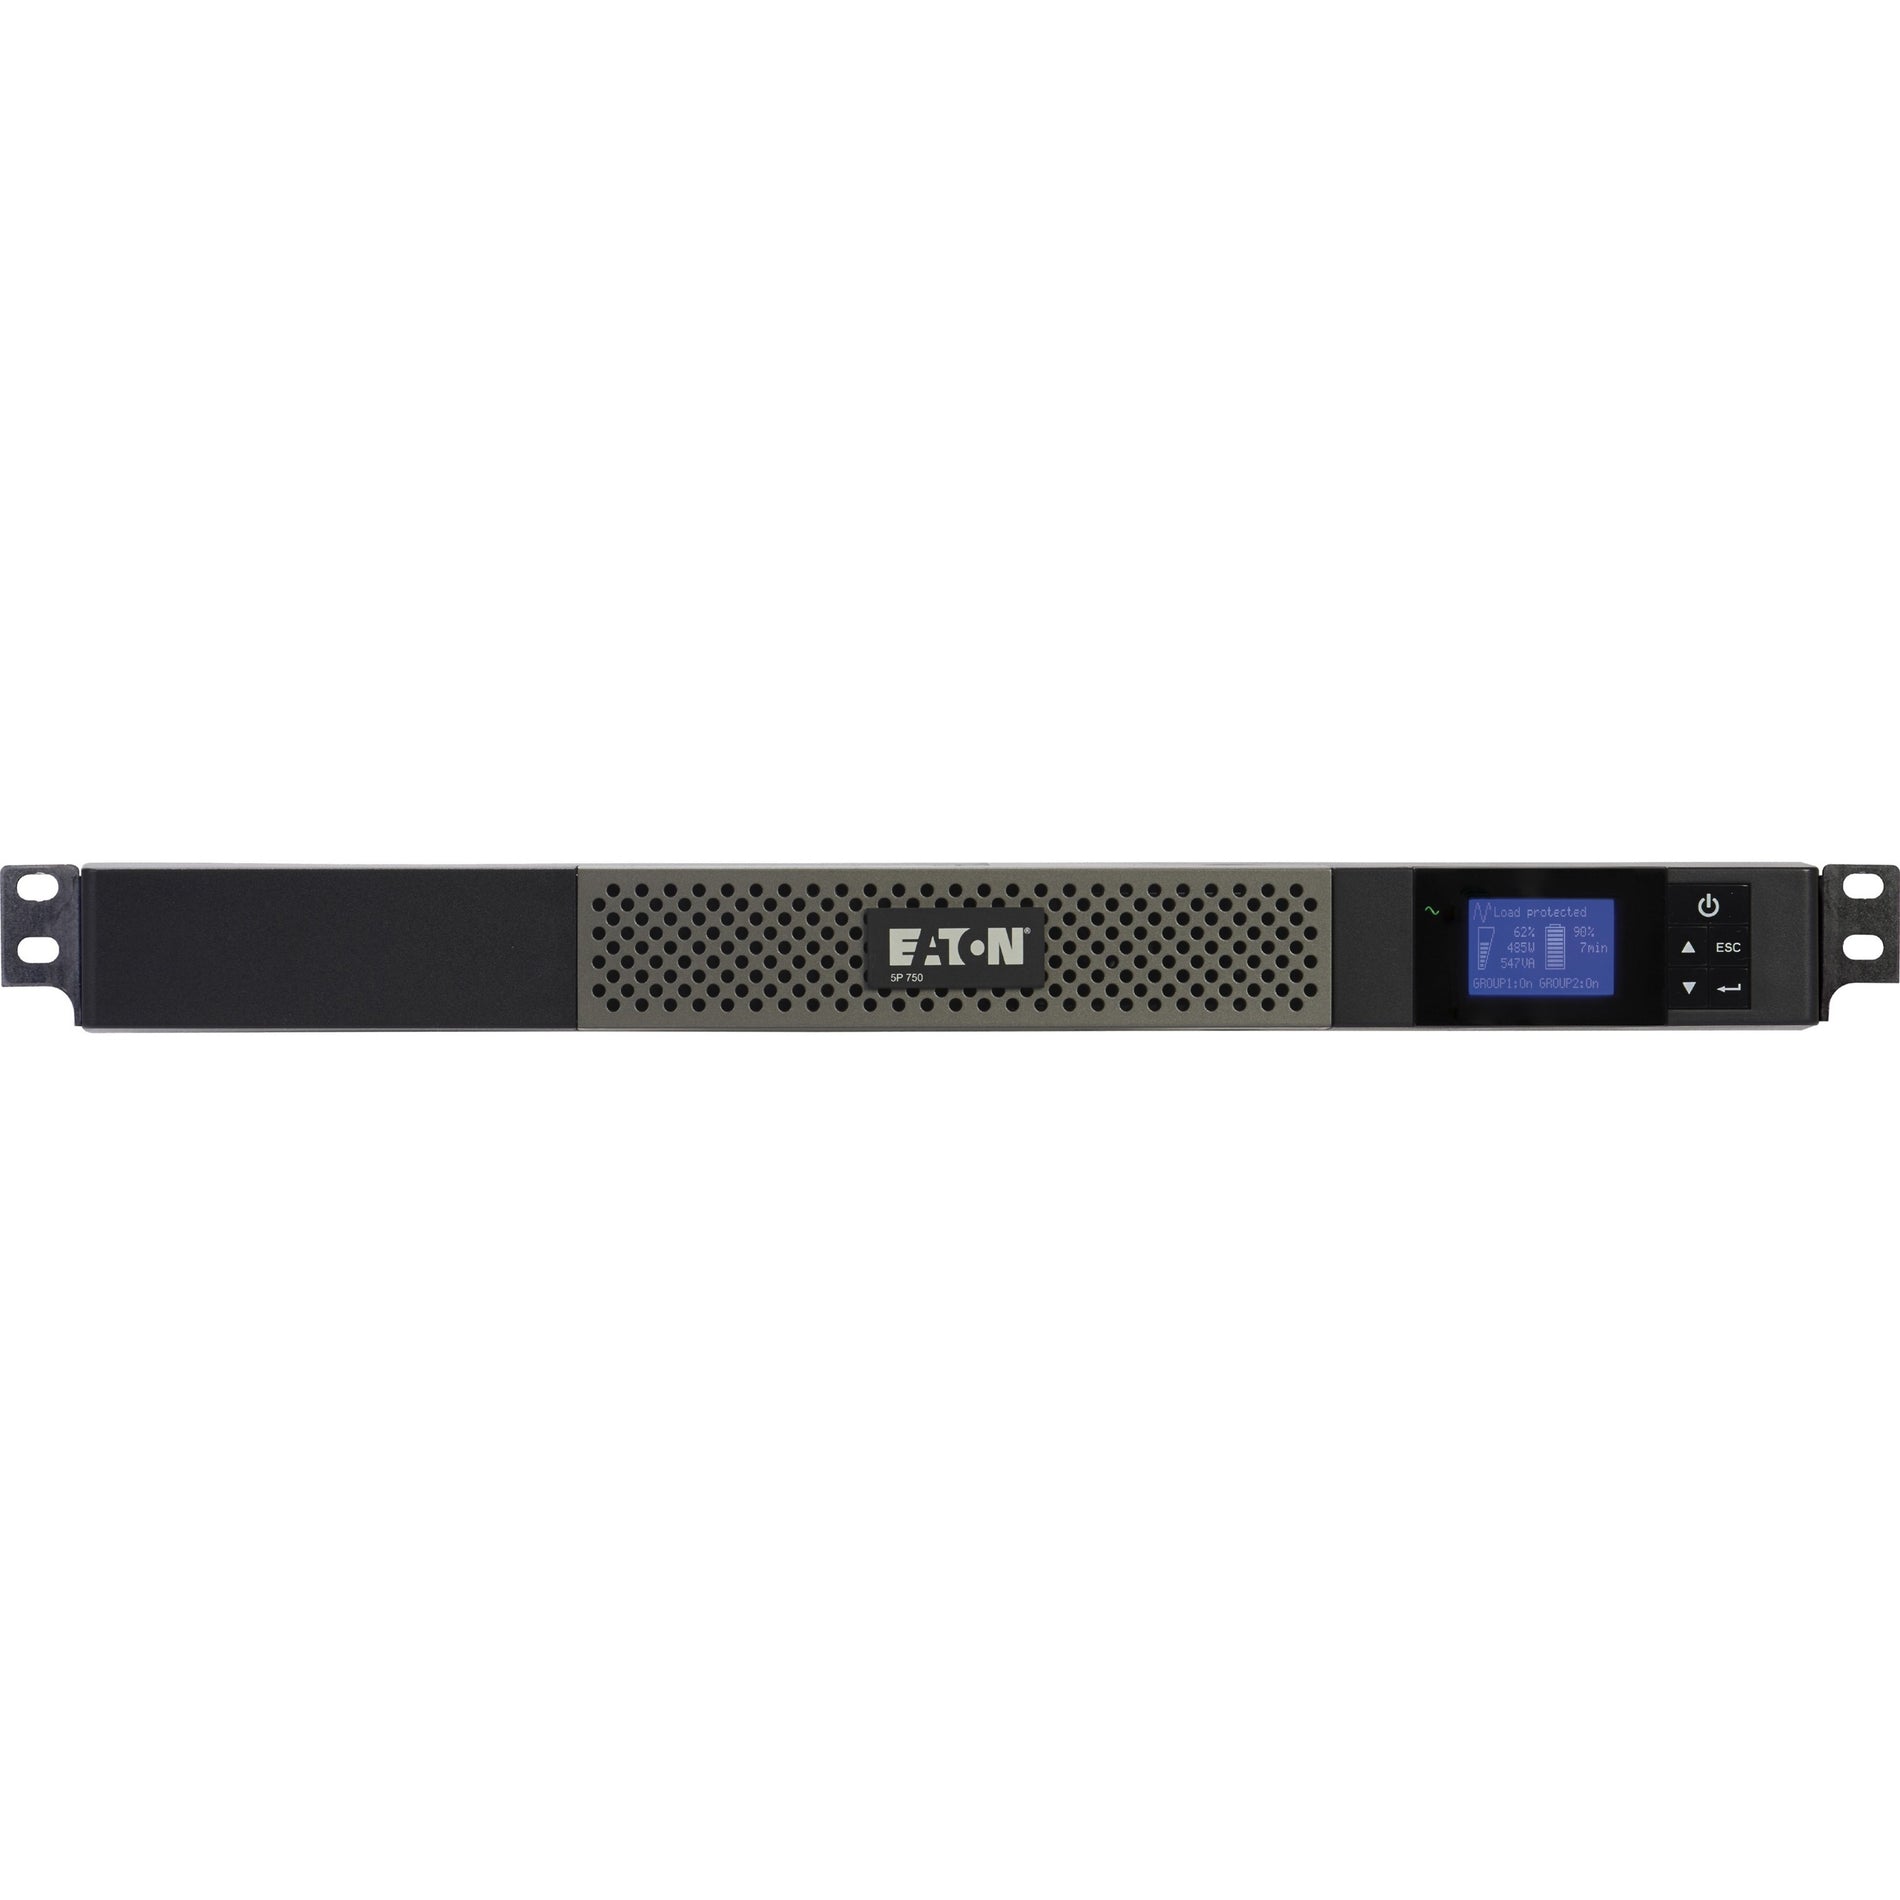 Eaton 5P 5P750R Rackmount UPS, 750VA 600W 120V Line-Interactive UPS, True Sine Wave, Cybersecure Network Card Option